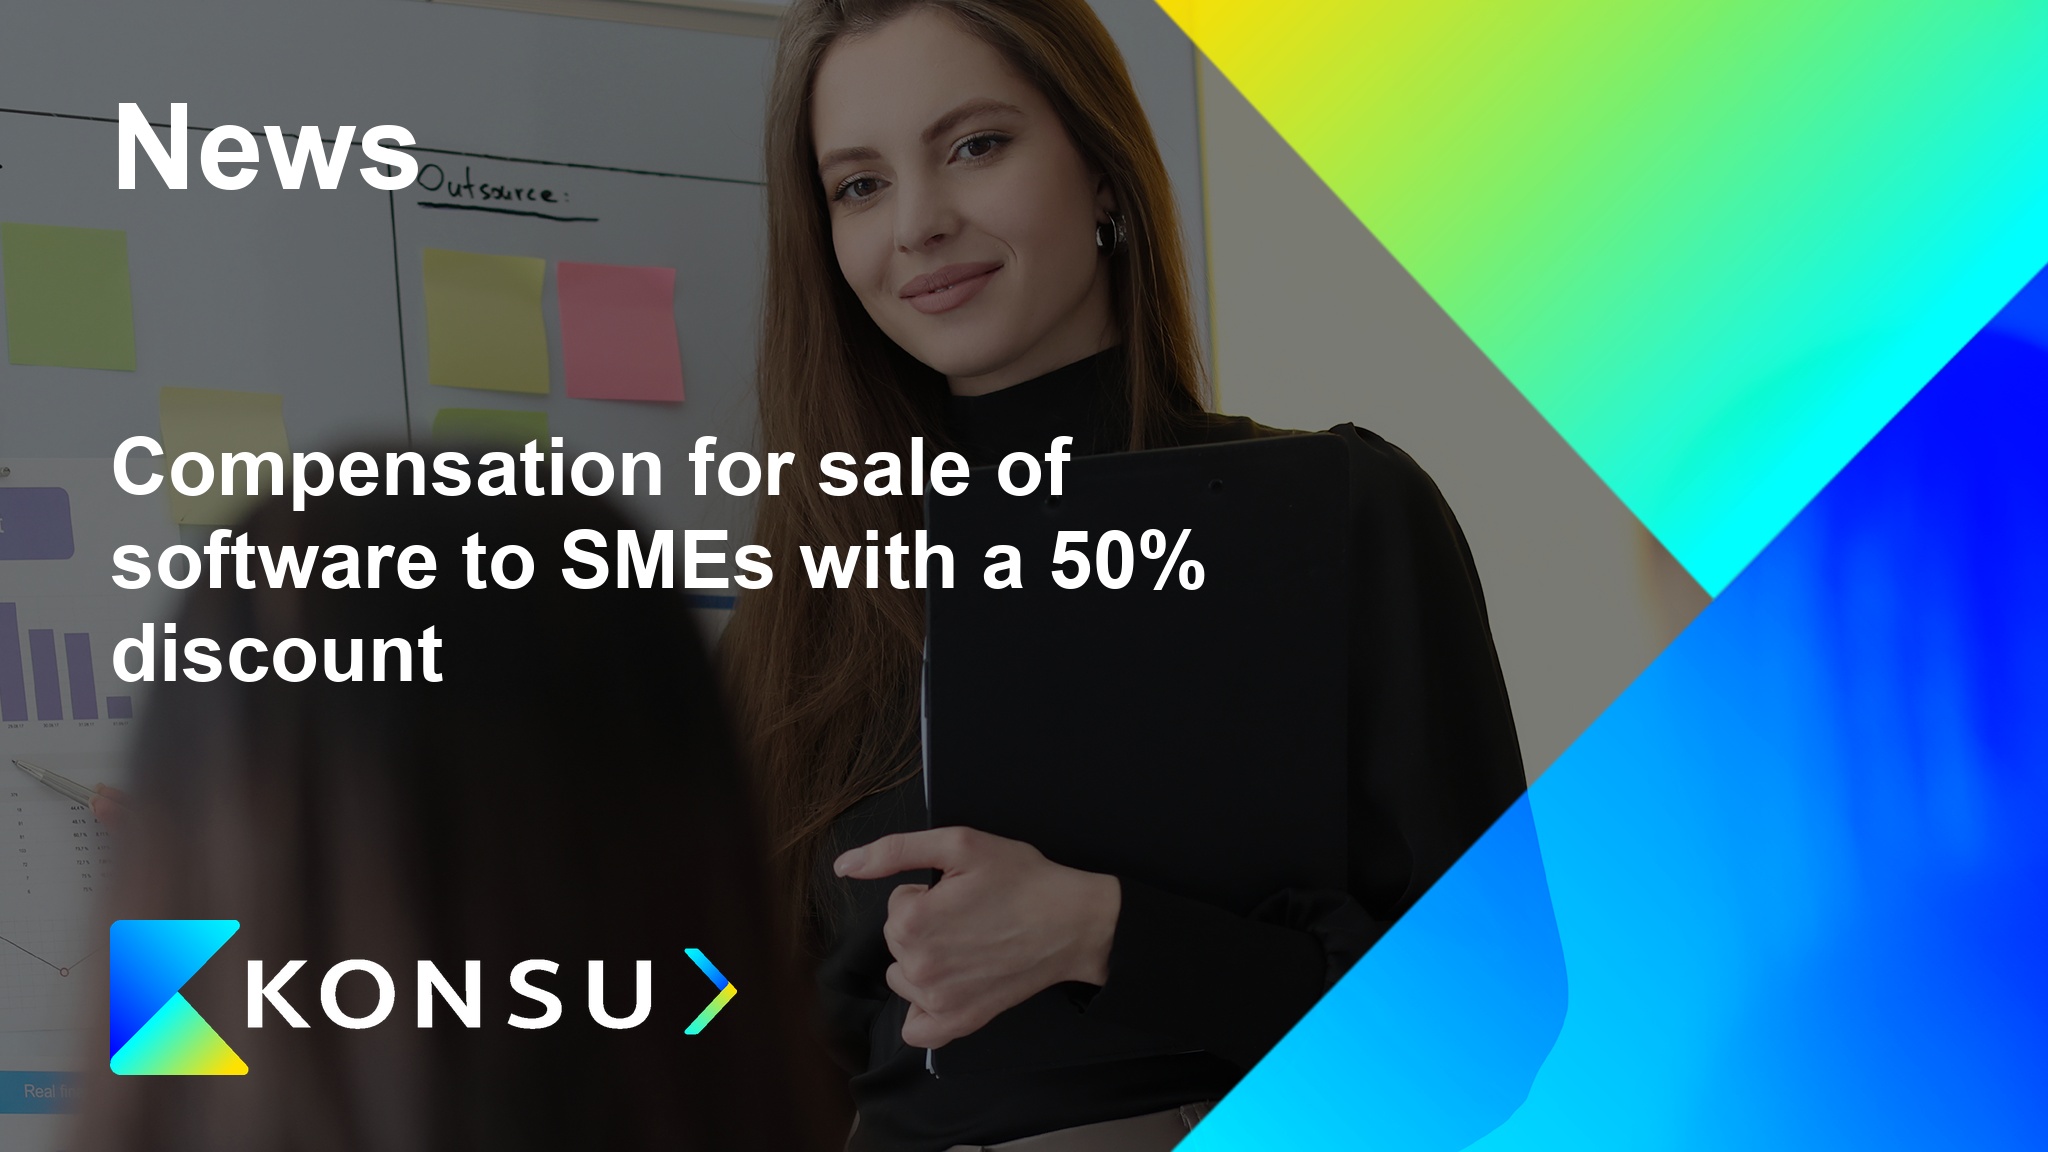 Compensation for sale software smes with 50 discount en konsu ou